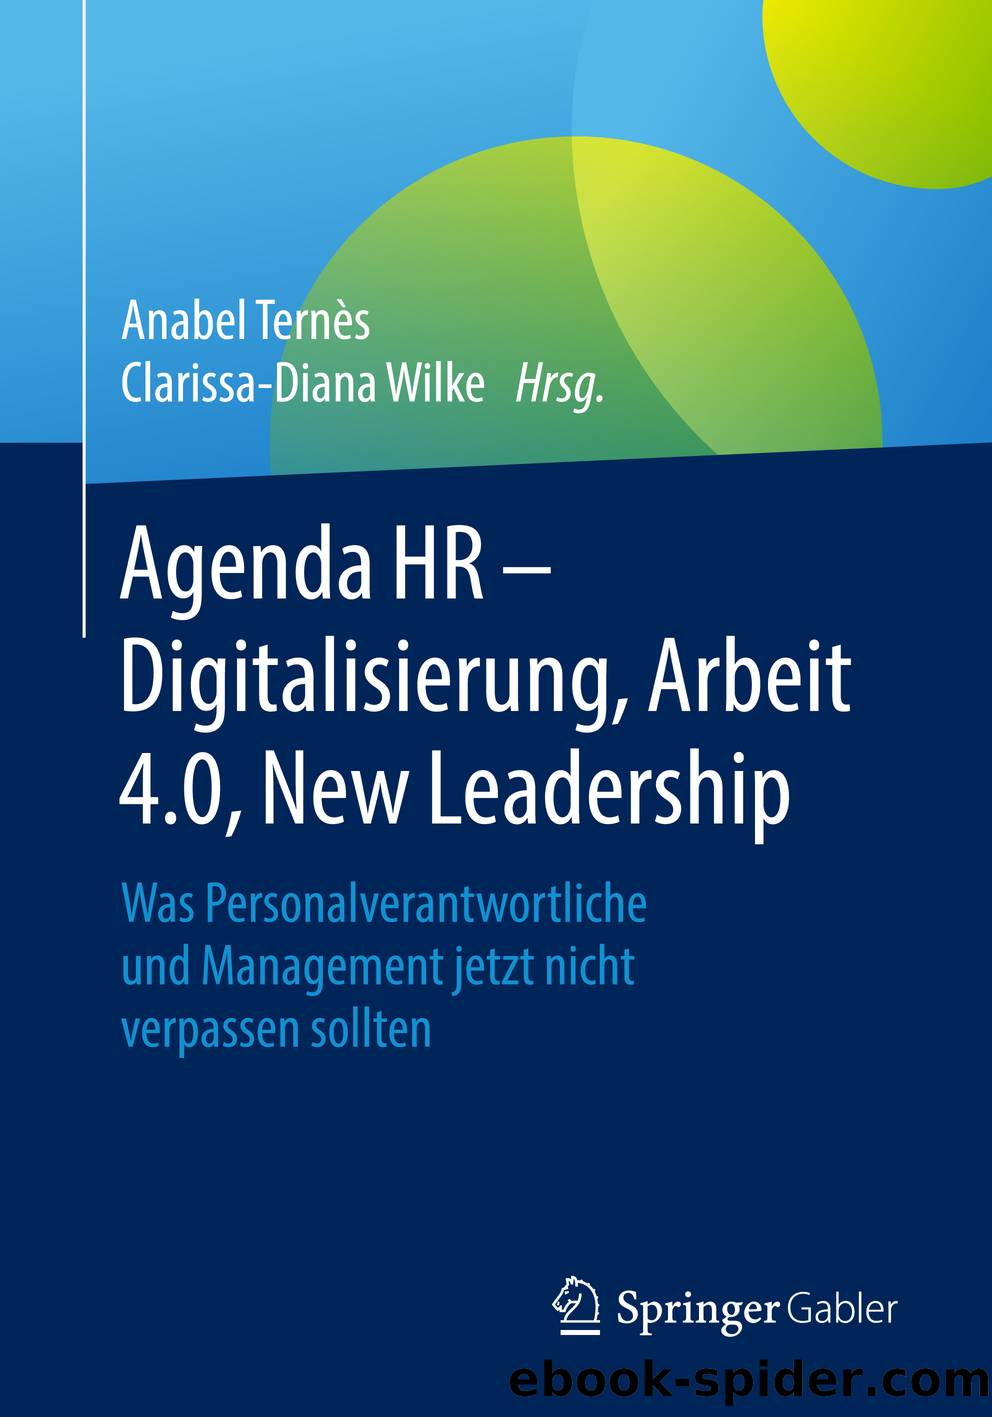 Agenda HR – Digitalisierung, Arbeit 4.0, New Leadership by Anabel Ternès & Clarissa-Diana Wilke